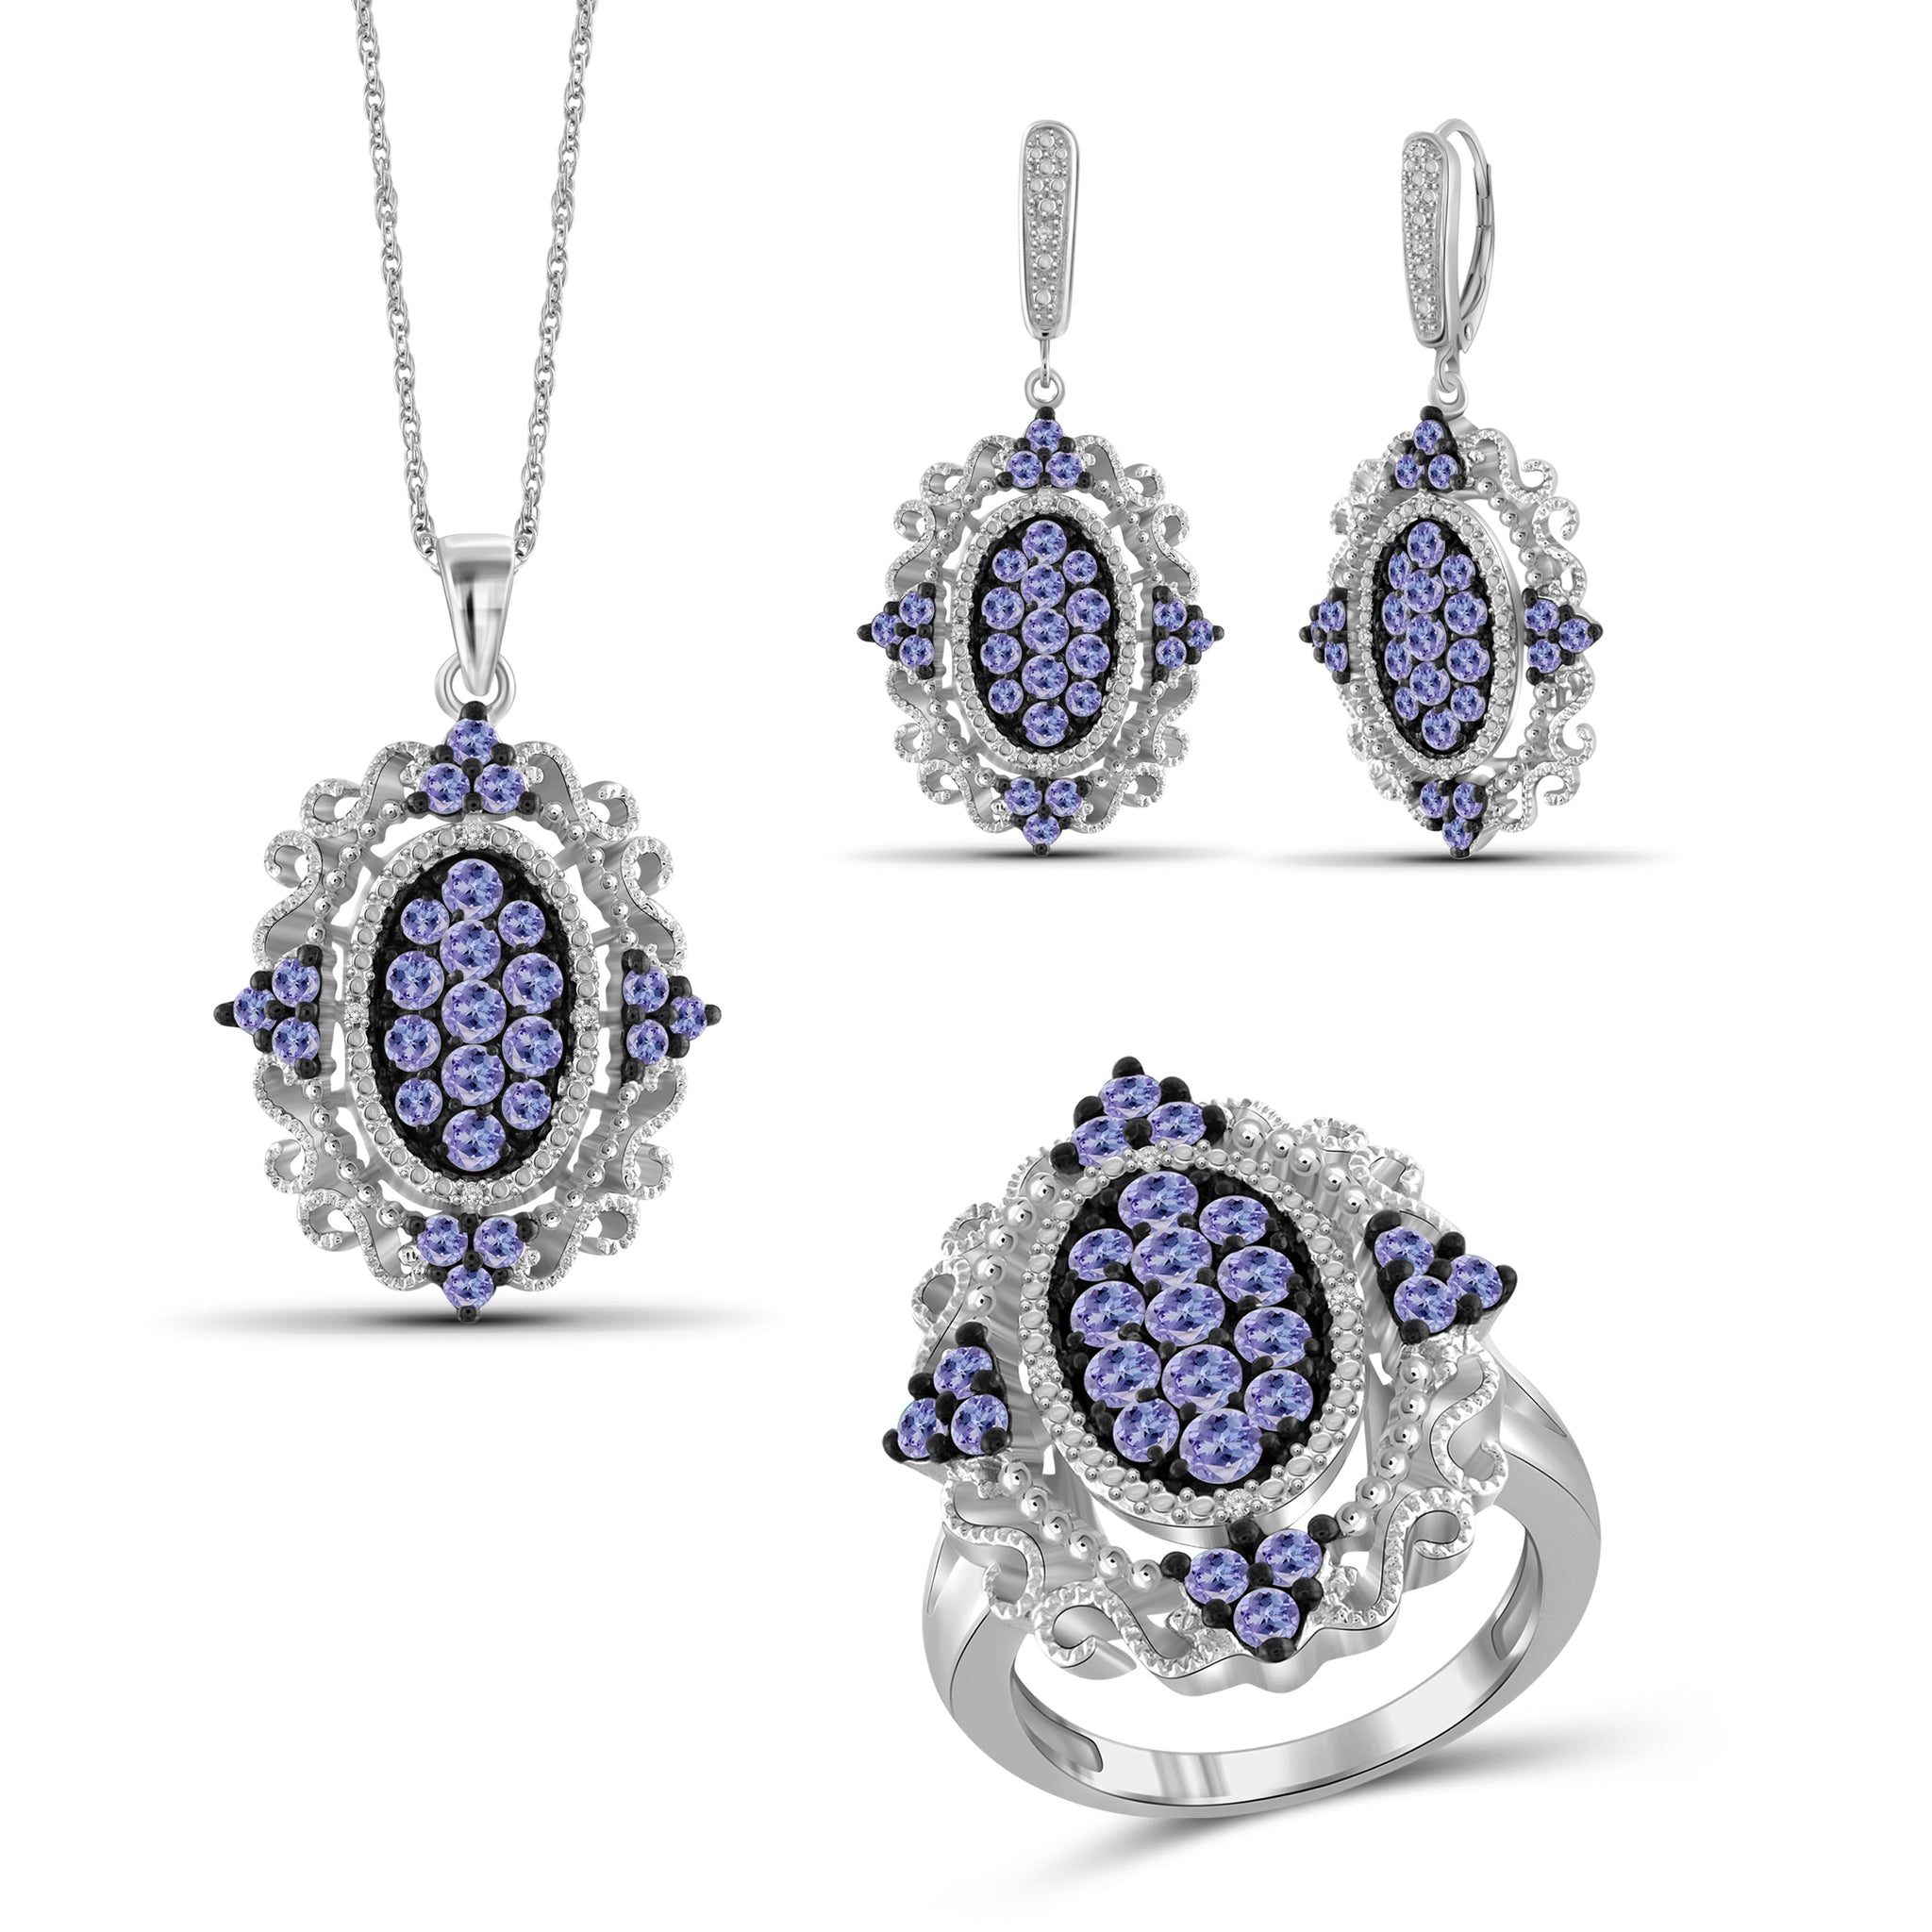 JewelonFire 5.00 Carat T.G.W. Tanzanite And 1/20 Carat T.W. White Diamond Sterling Silver 3 Piece Jewelry Set - Assorted Colors